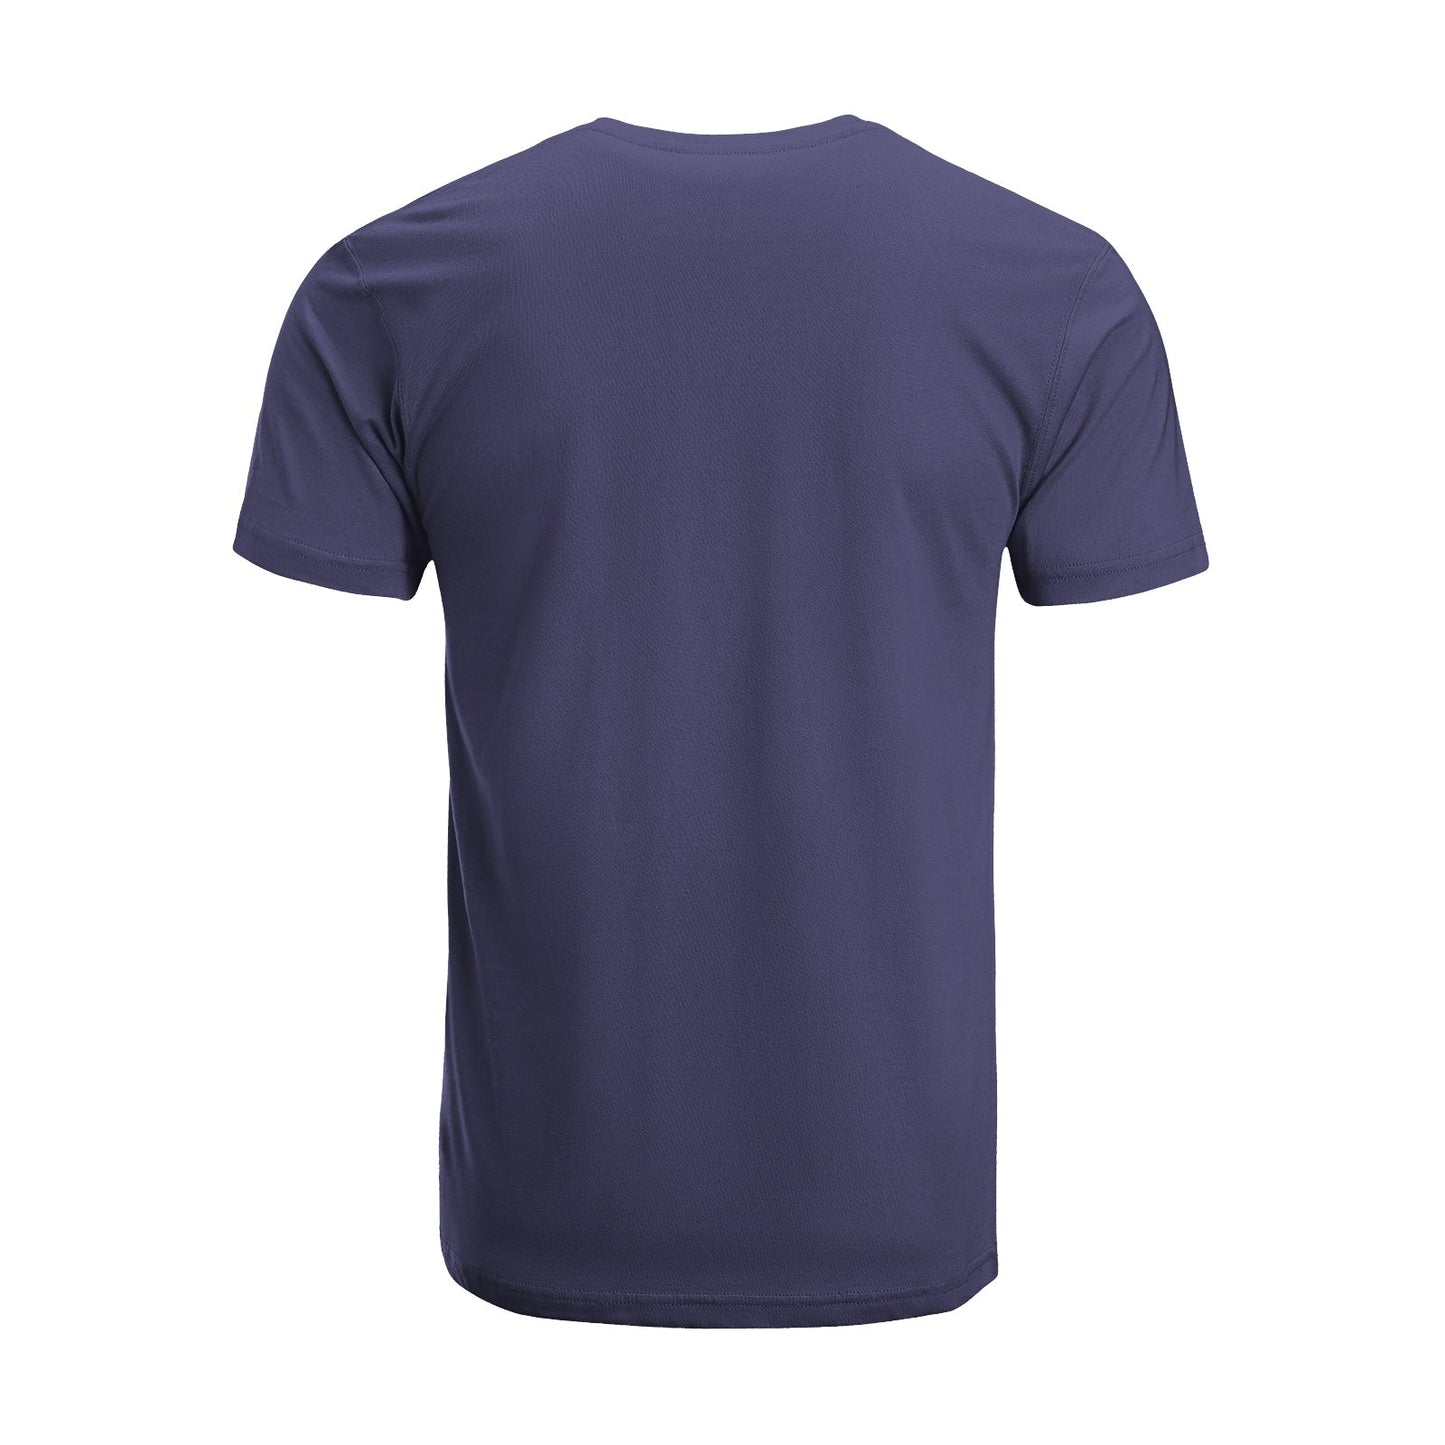 Unisex Short Sleeve Crew Neck Cotton Jersey T-Shirt VEGAN 14